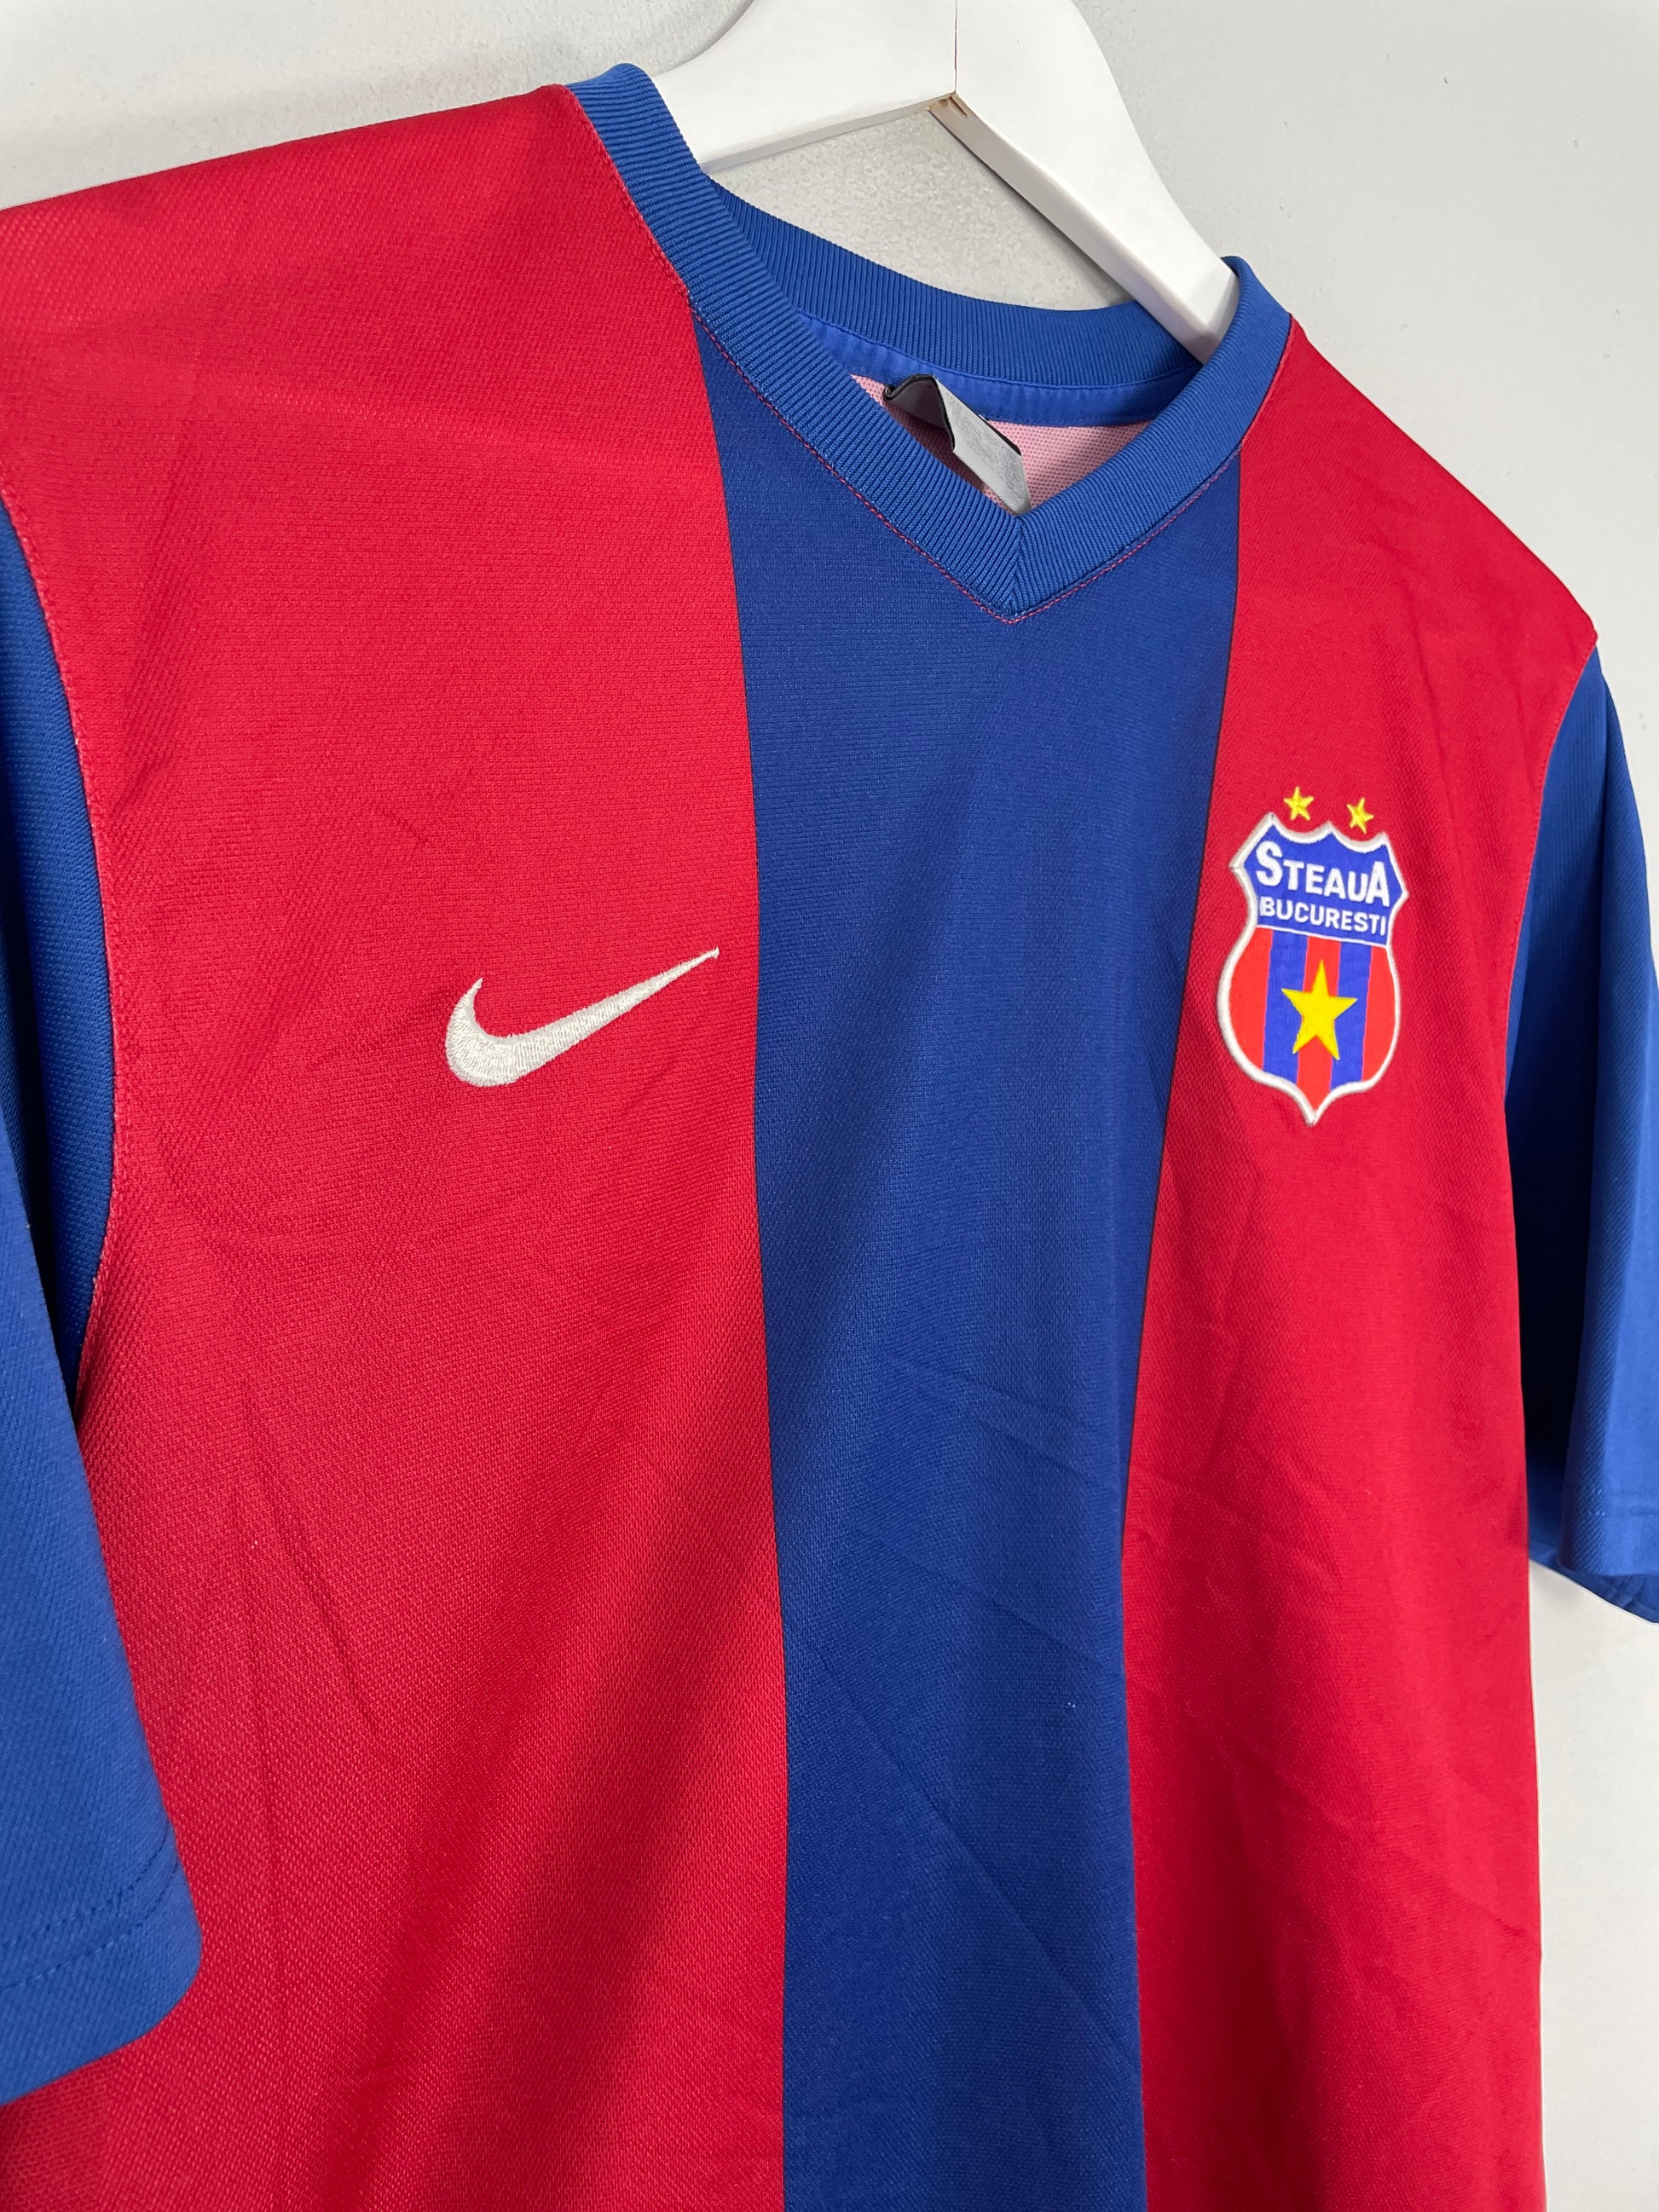 FootballShirtCulture.com on X: New FC Steaua București (Bucharest) 2014-15  Nike Away football shirt/kit. More pics:  #FCSB   / X